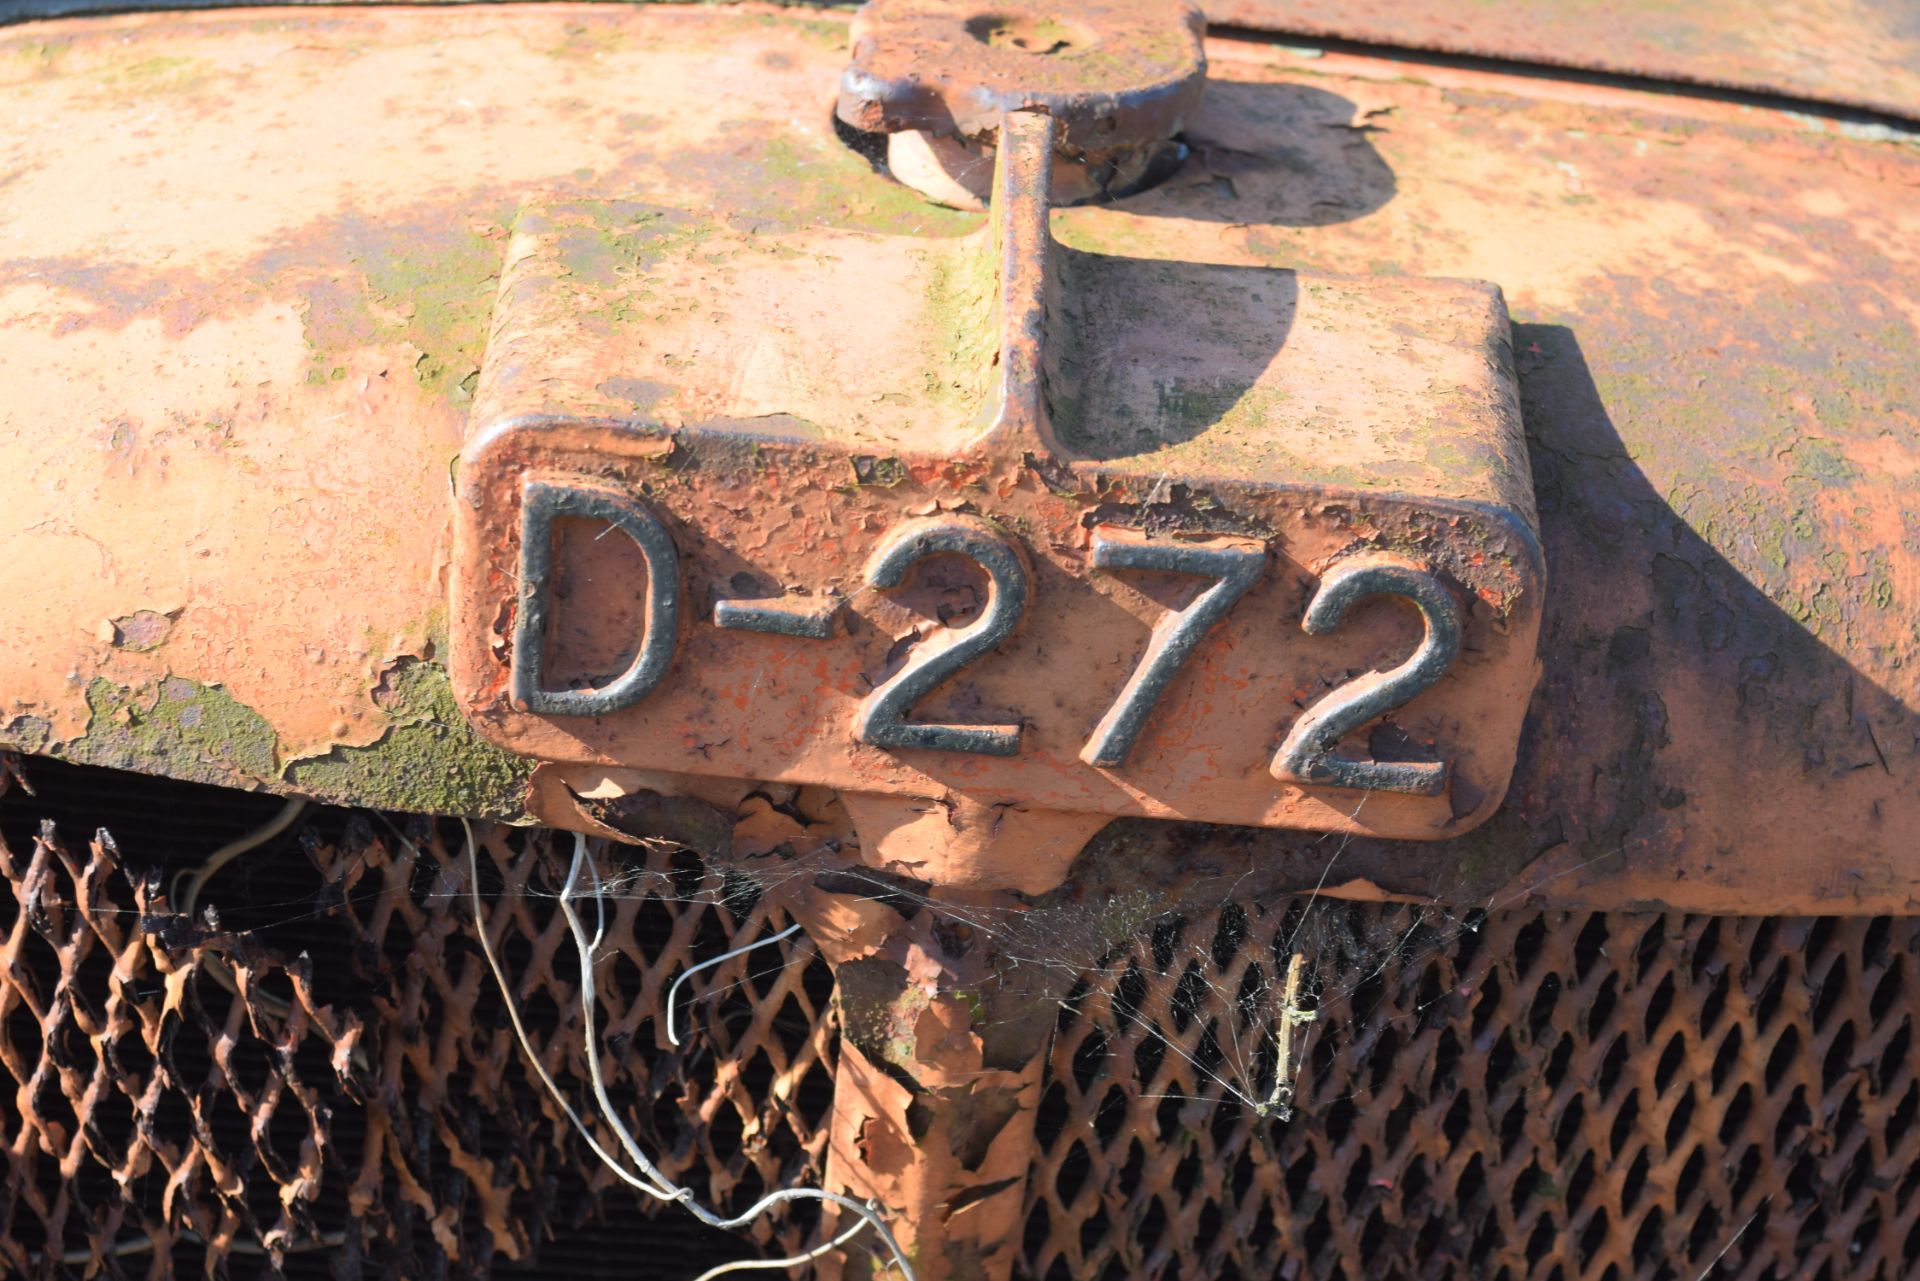 Allis Chalmers D-272 vintage tractor - Image 3 of 3